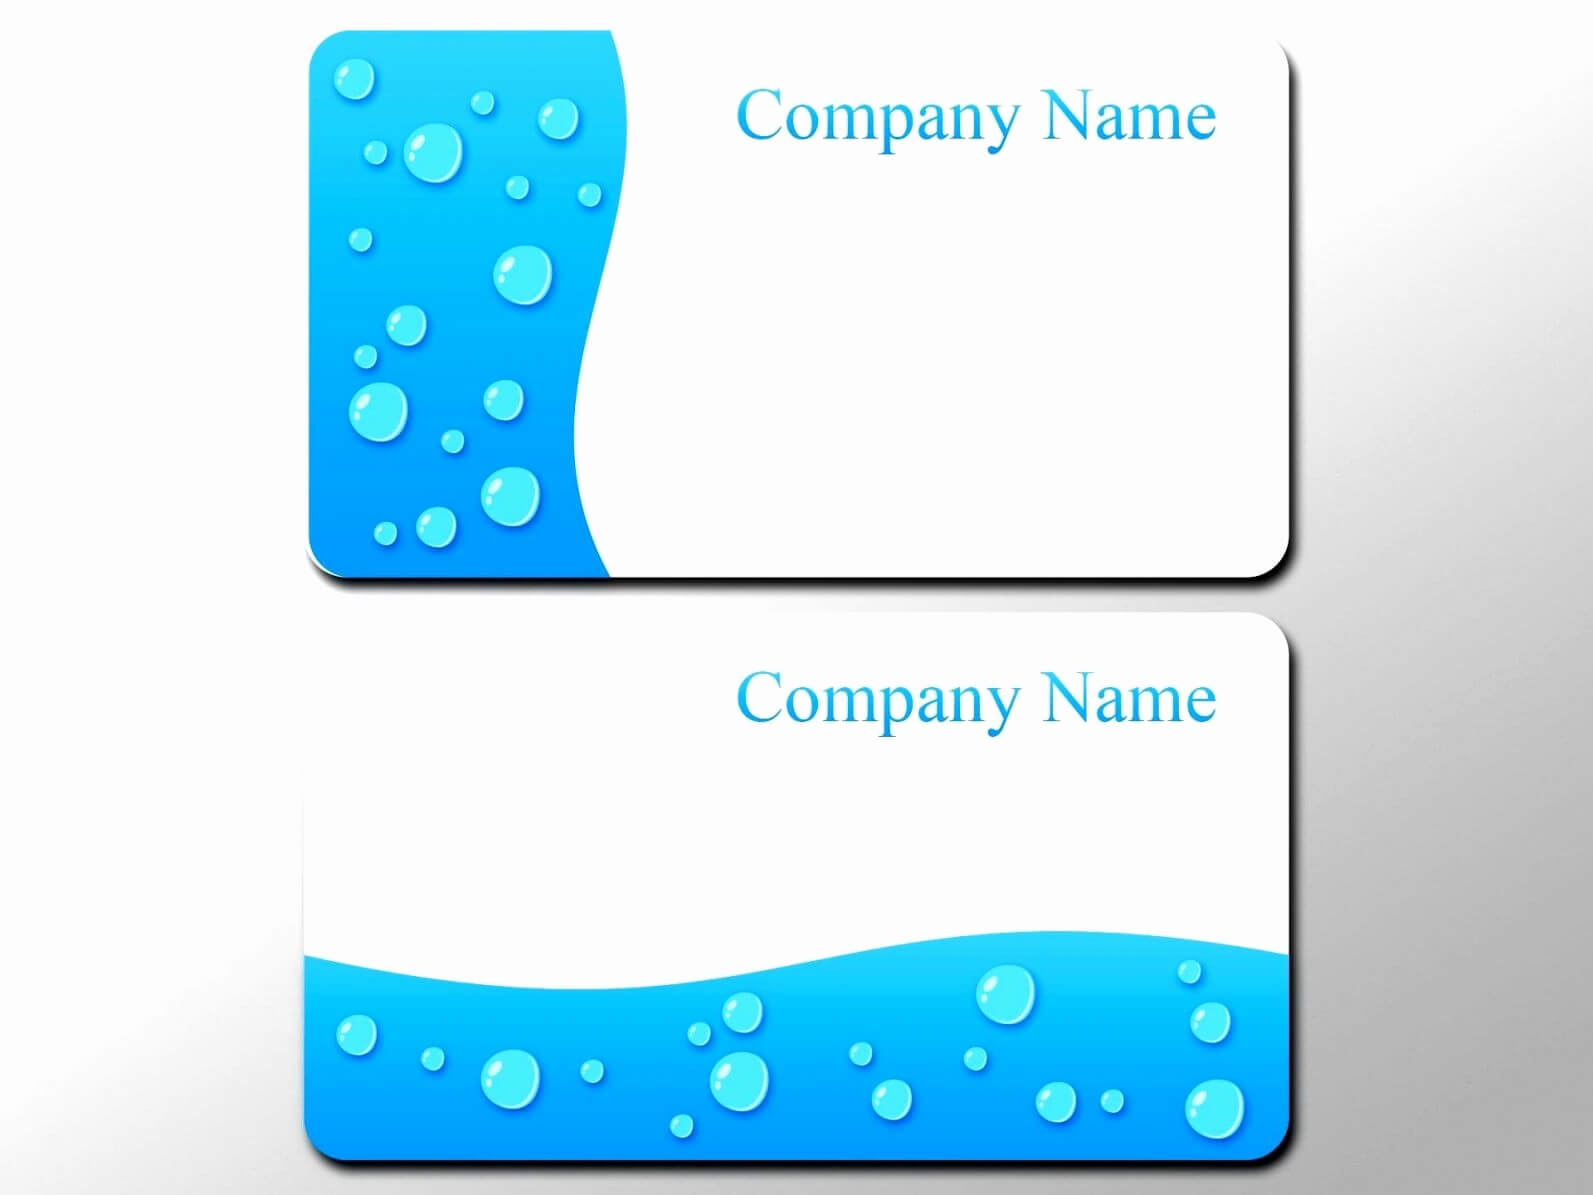 Business Card Format Photoshop Template Cc Beautiful For Intended For Business Card Size Template Photoshop